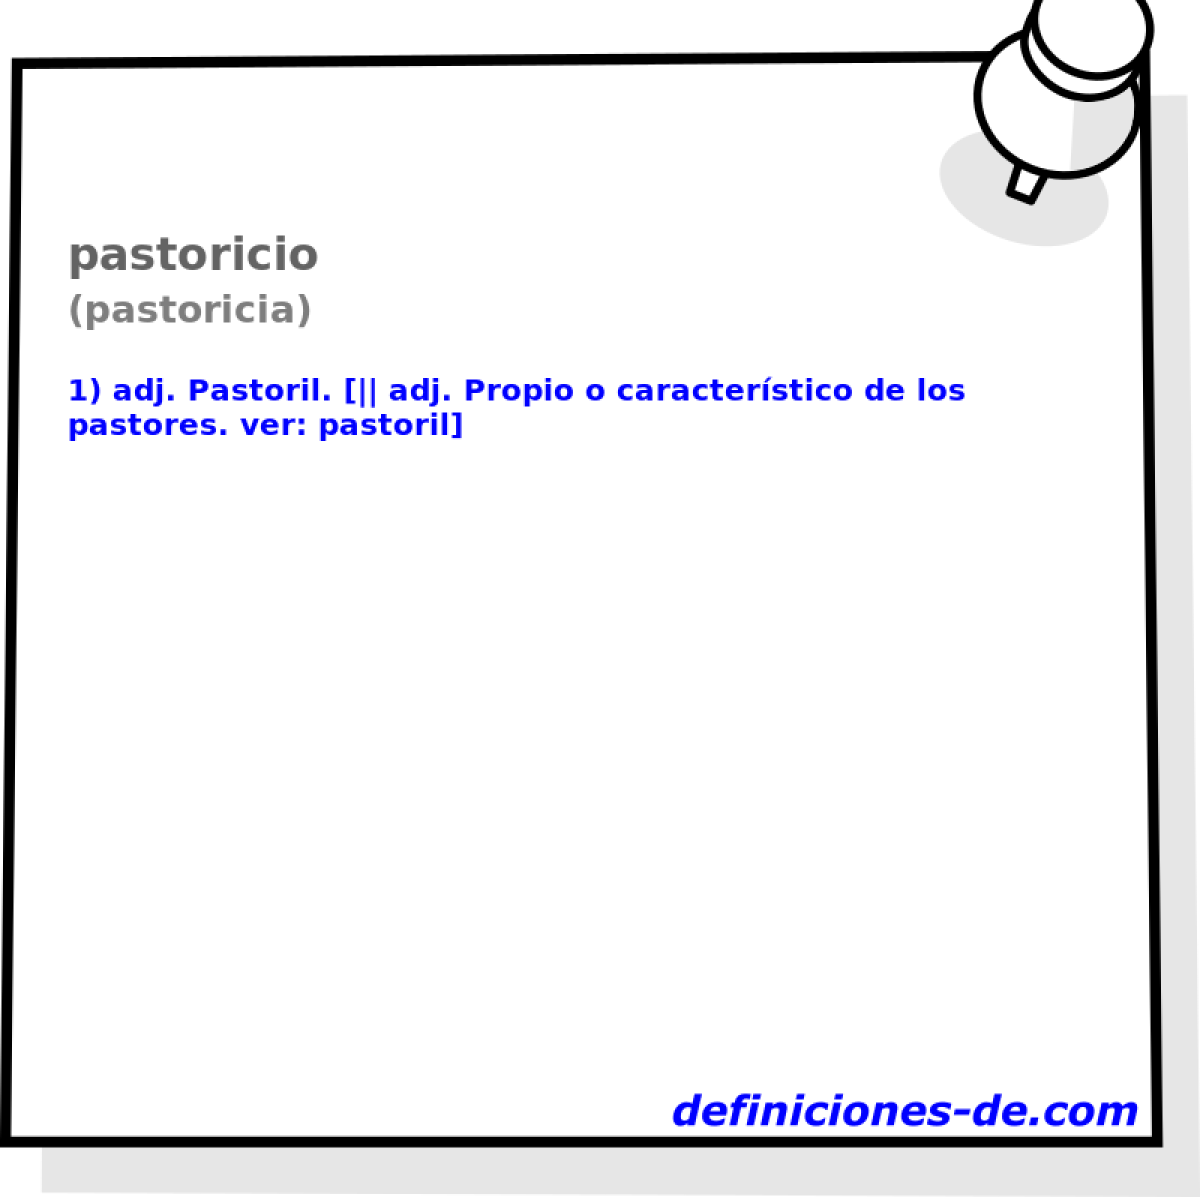 pastoricio (pastoricia)